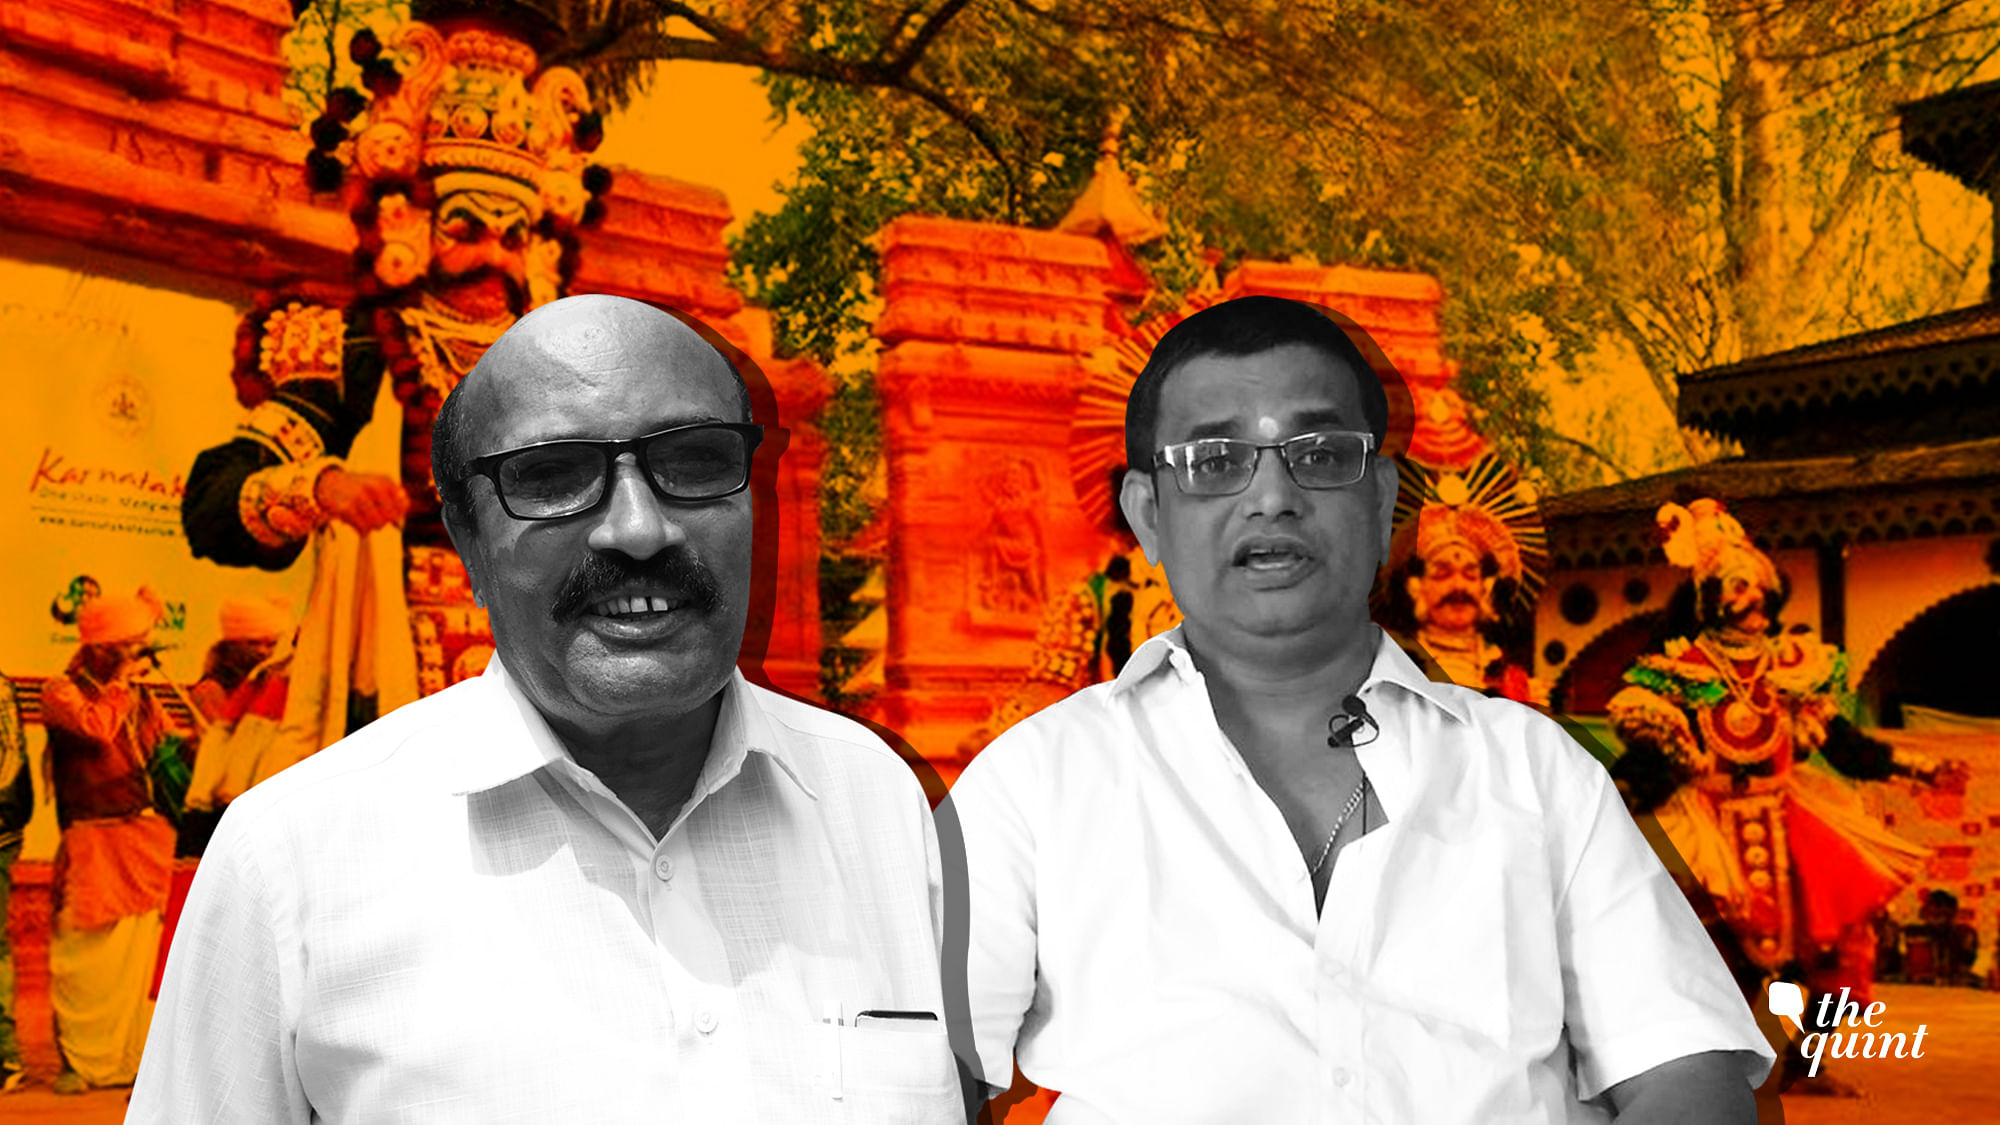 Yakshagana artists from coastal Karnataka talk about why it’s bad to mix art and politics, in light of the Lok Sabha elections.